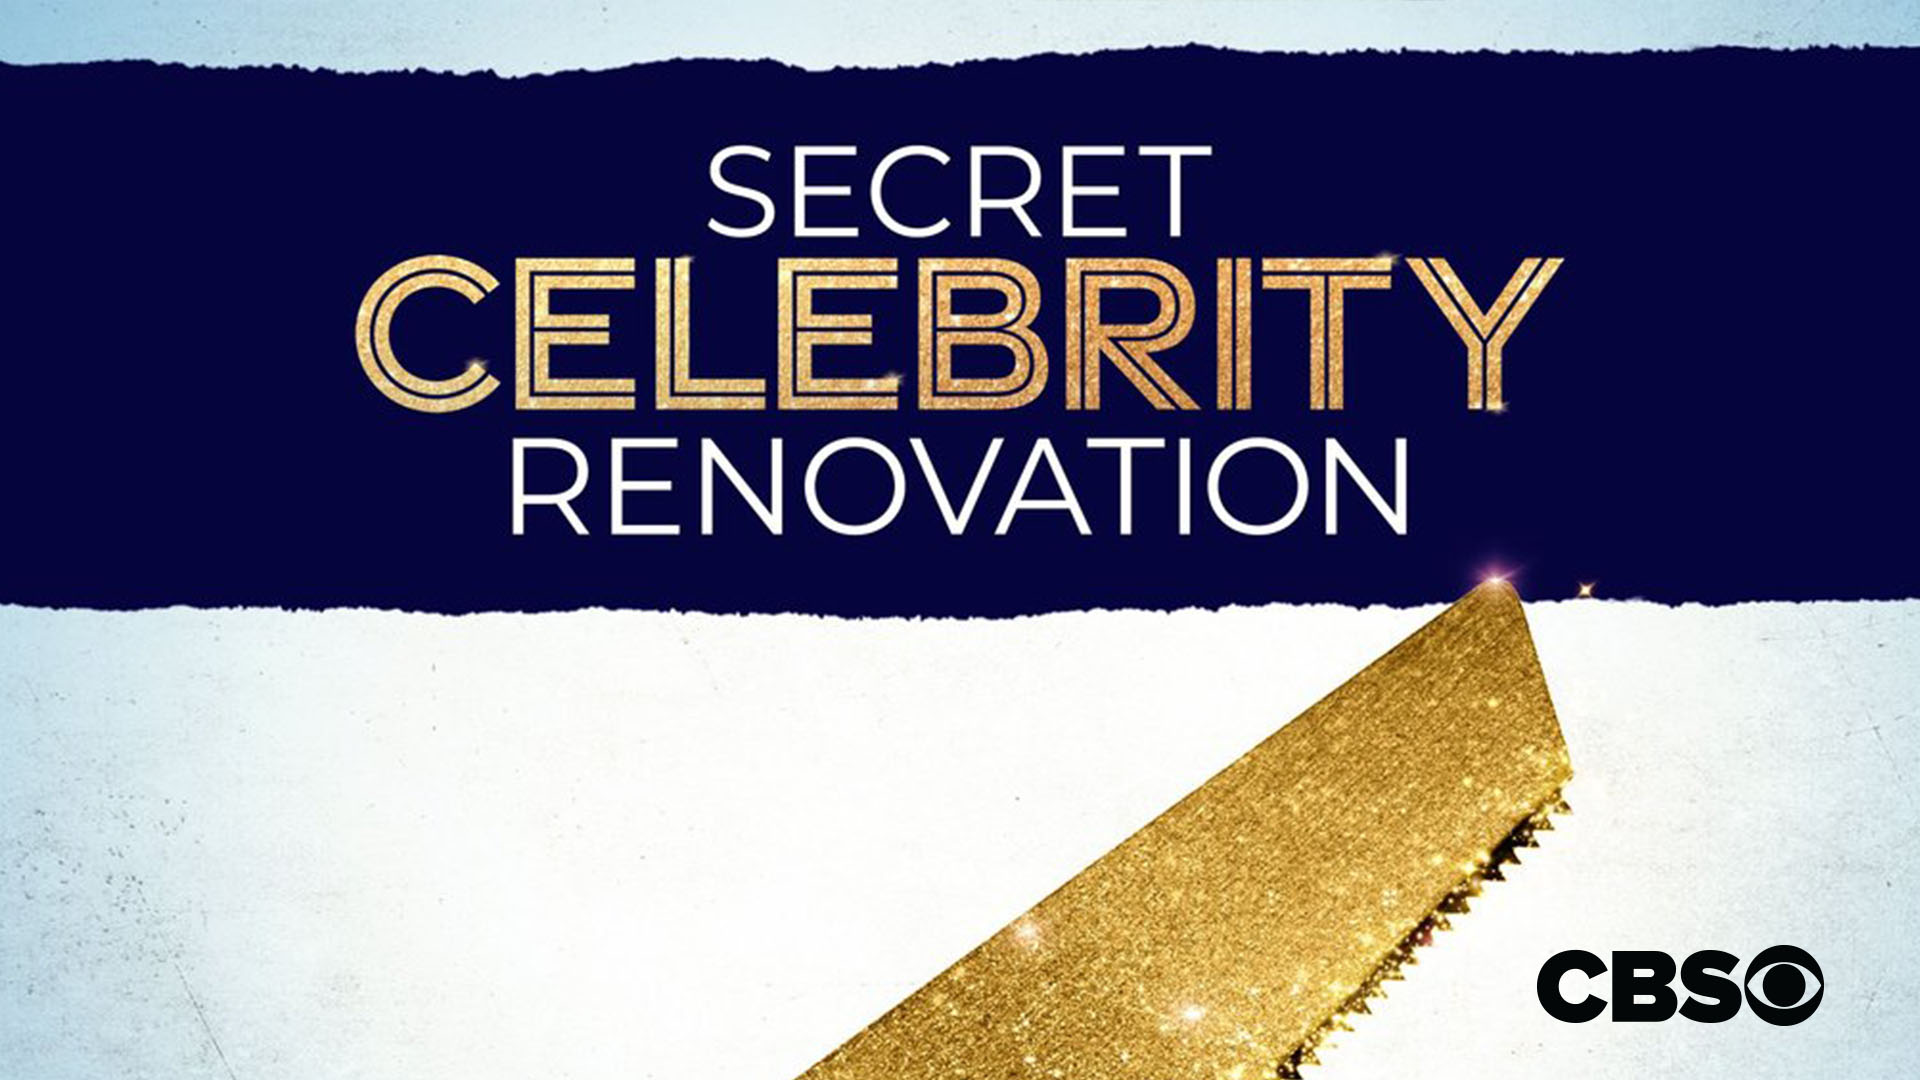 Secret Celebrity Renovation Featured Image